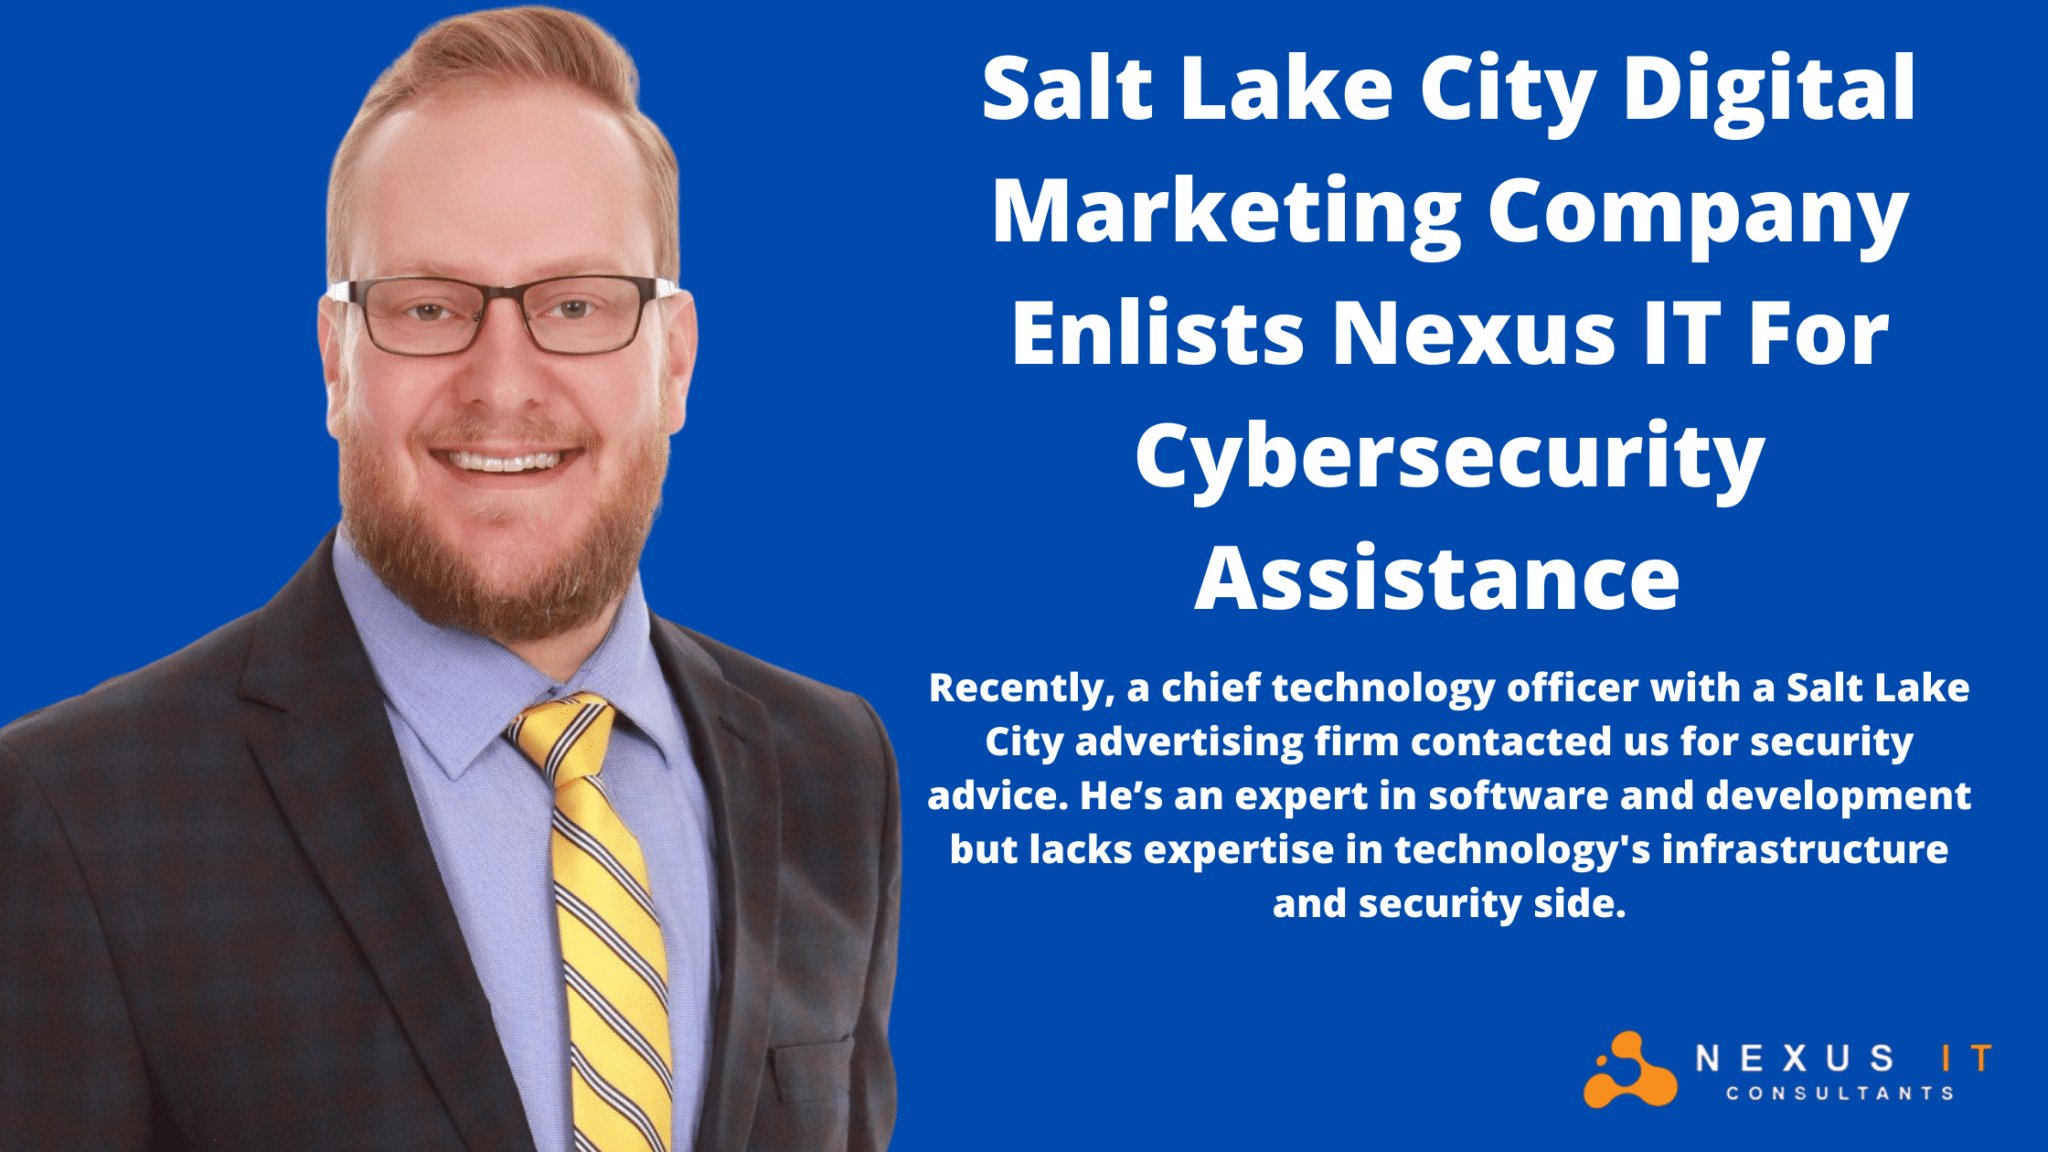 Salt Lake City Digital Marketing Company Enlists Nexus IT For Cybersecurity Assistance